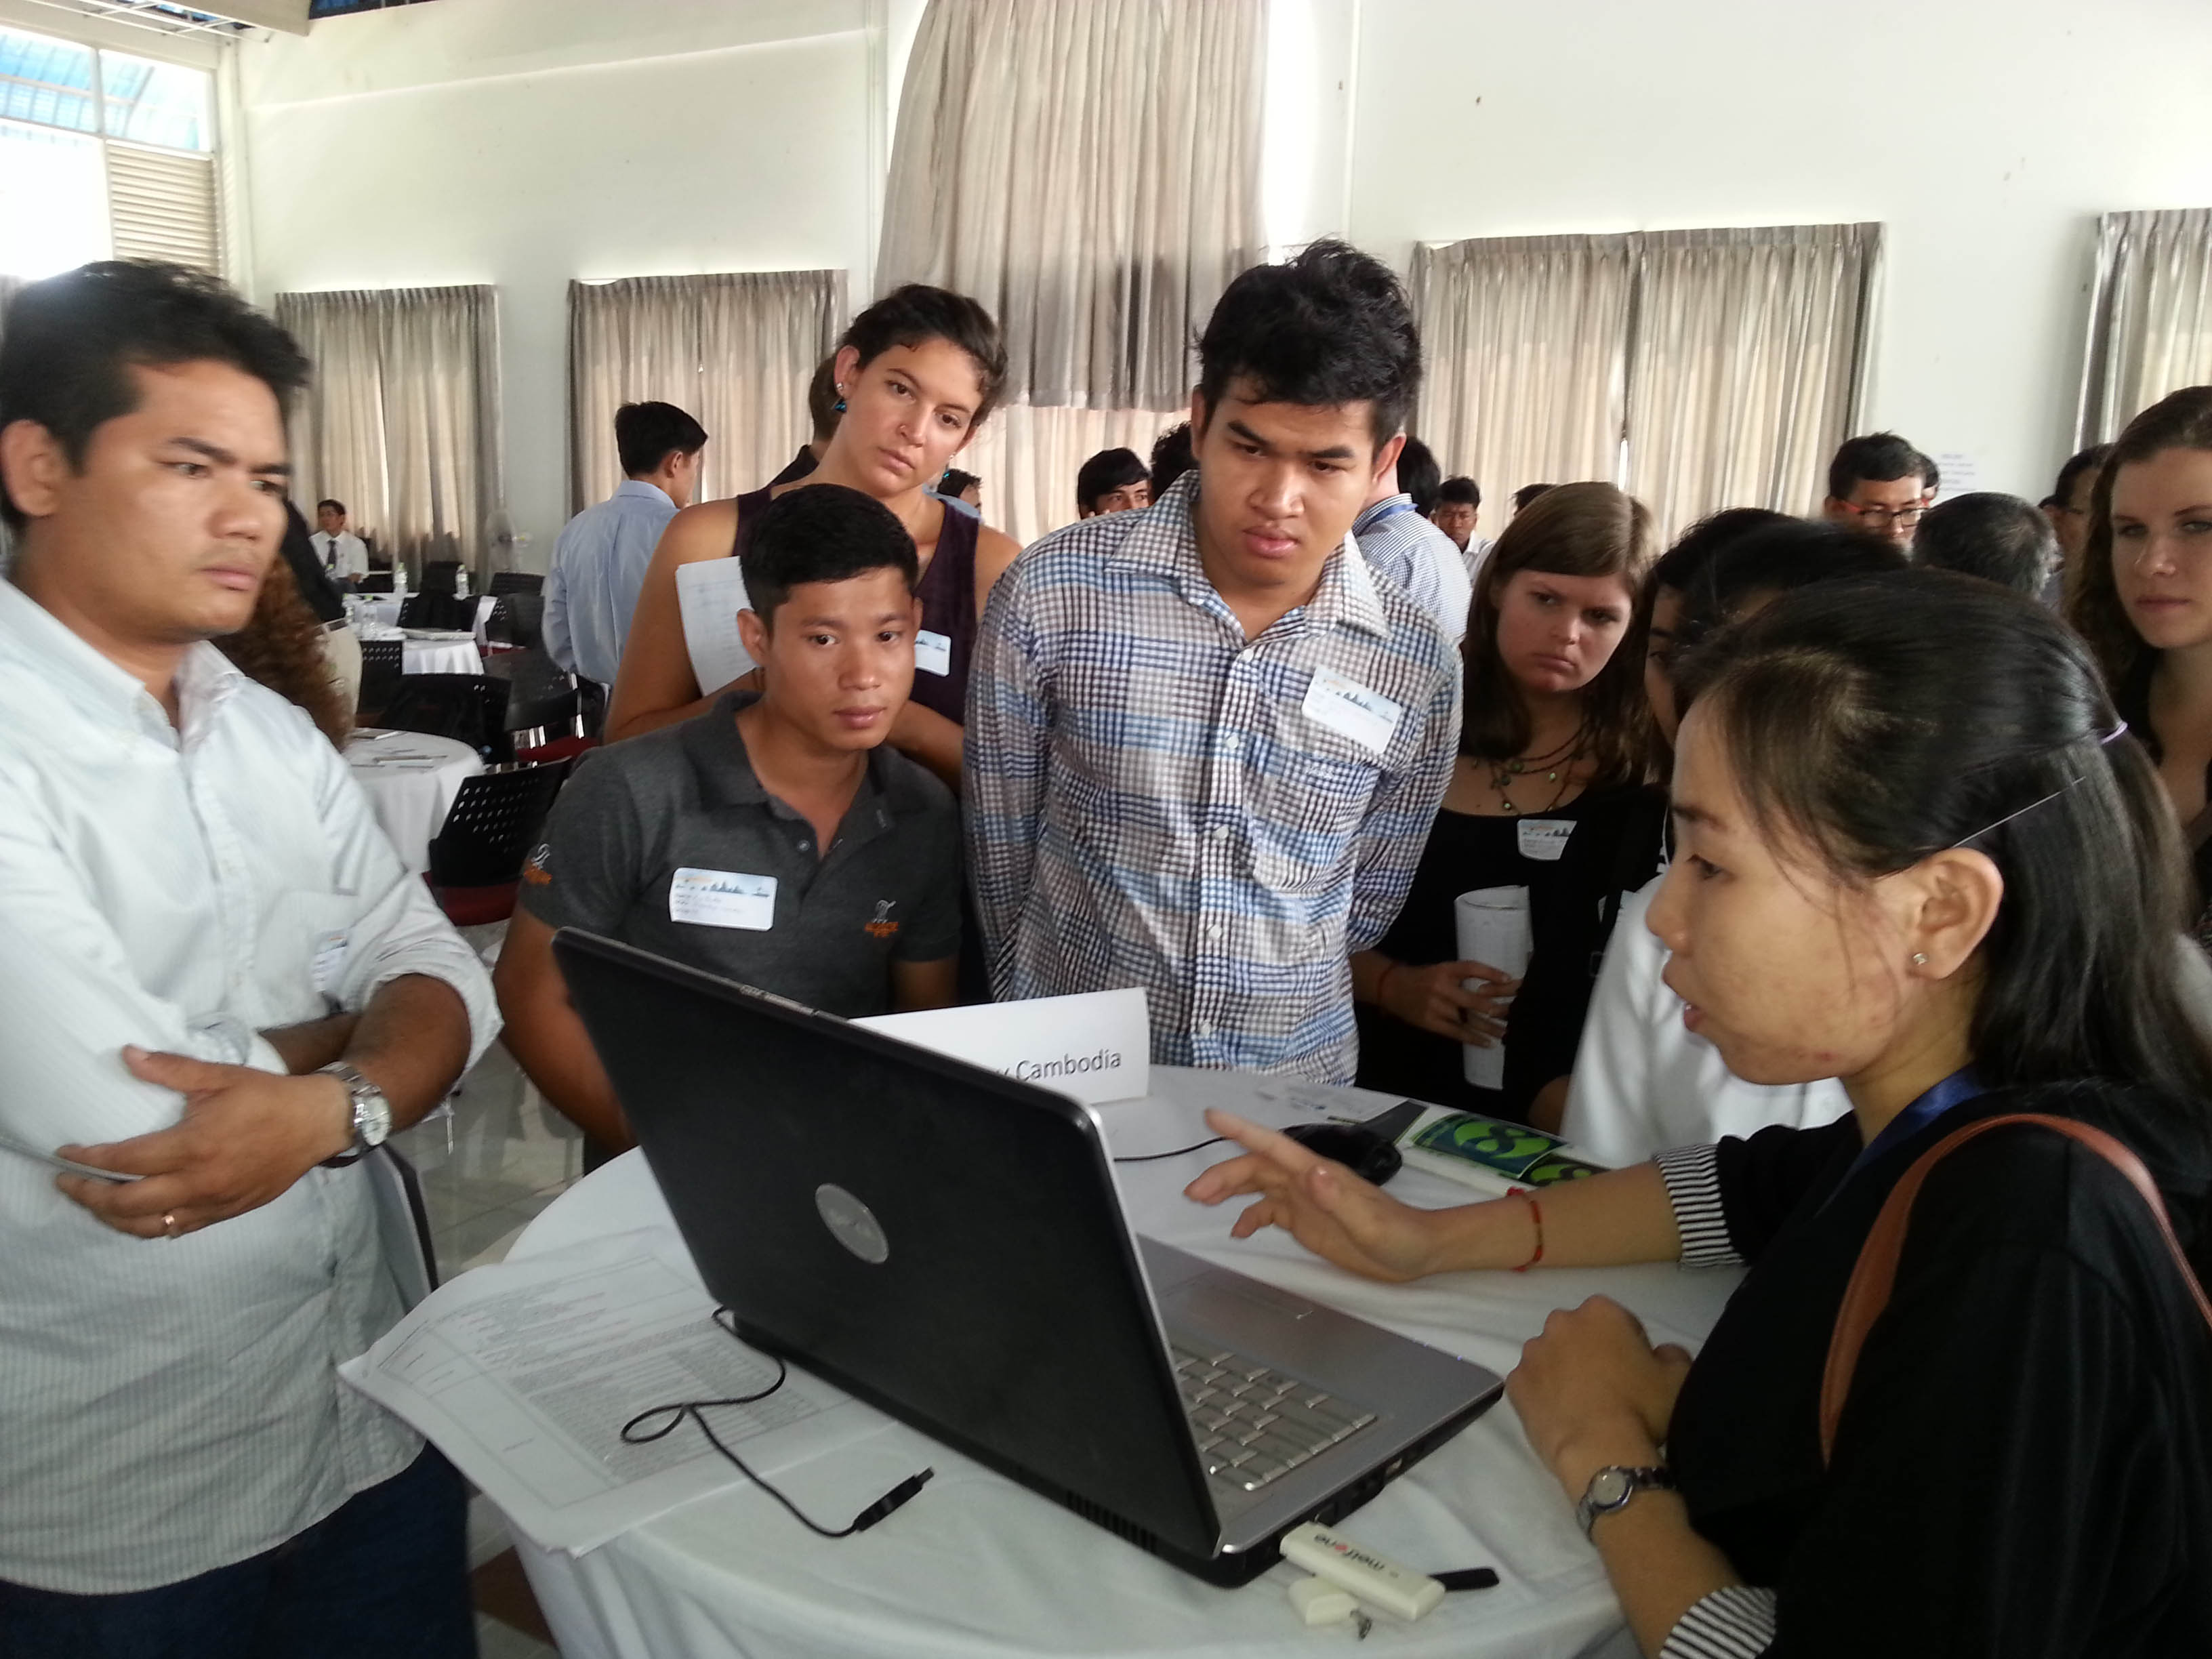 Design Team Leader Heng Huy Eng demonstrates ODC website usage to participants.